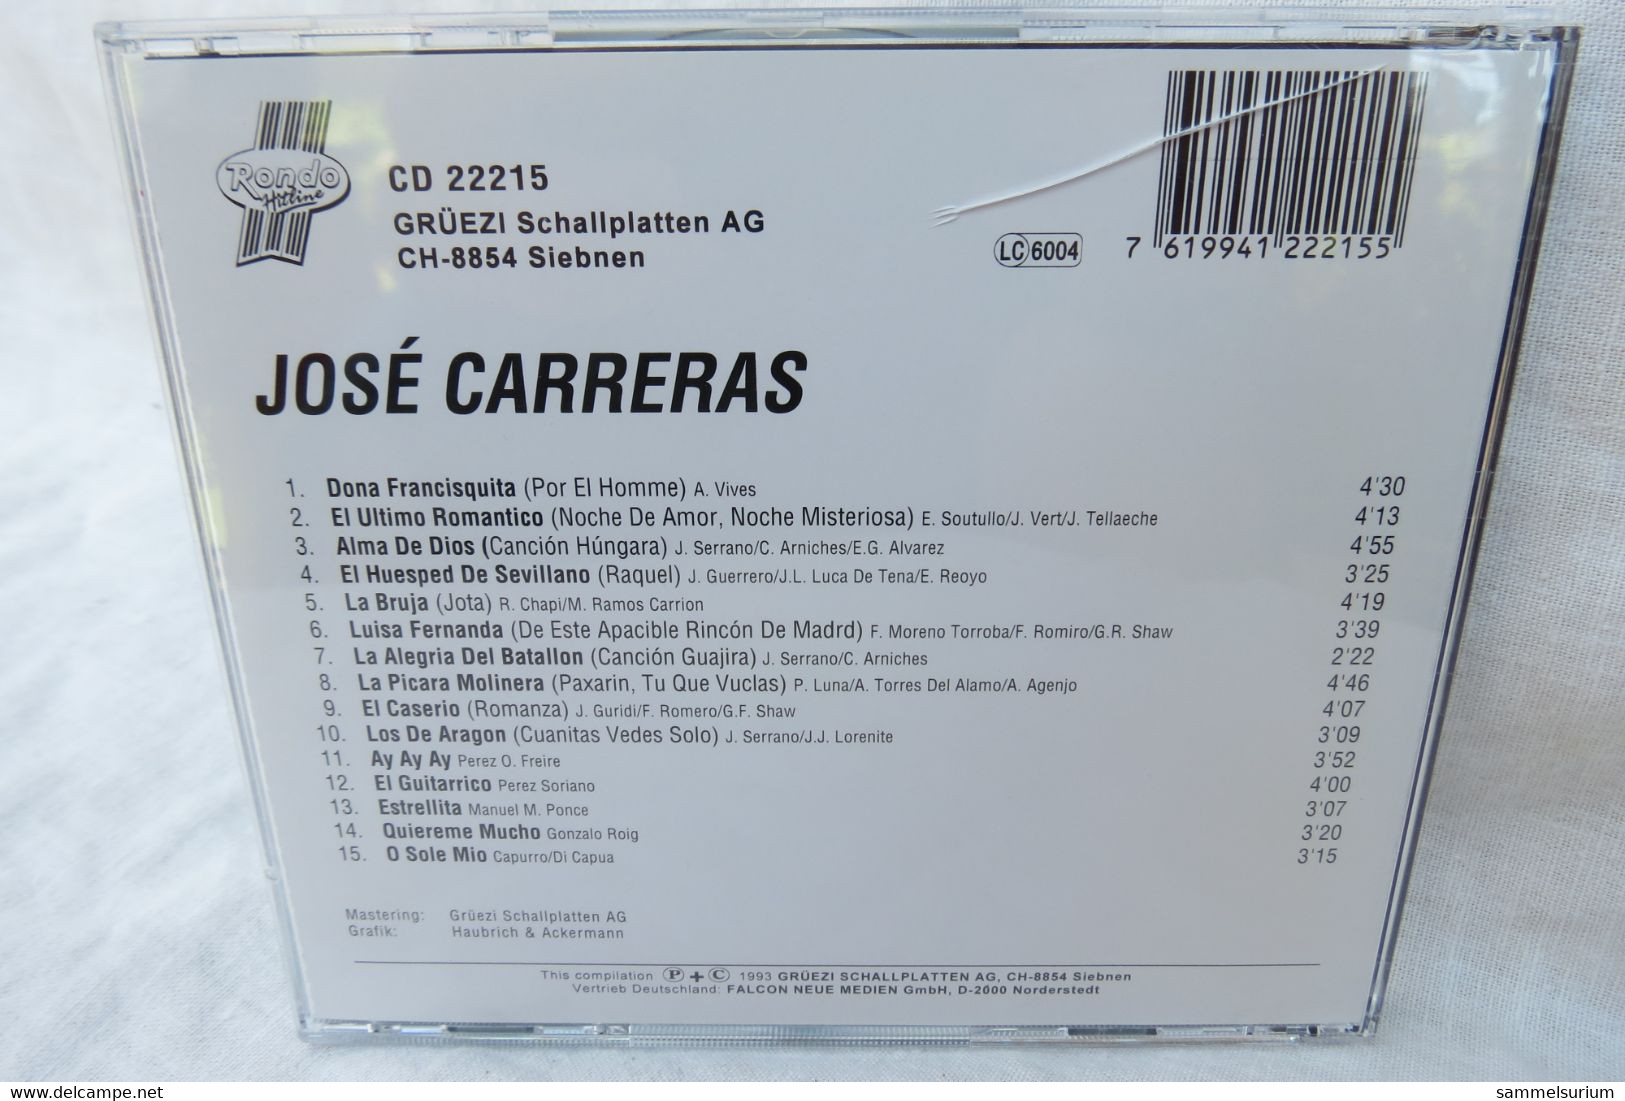 CD "José Carreras" - Oper & Operette